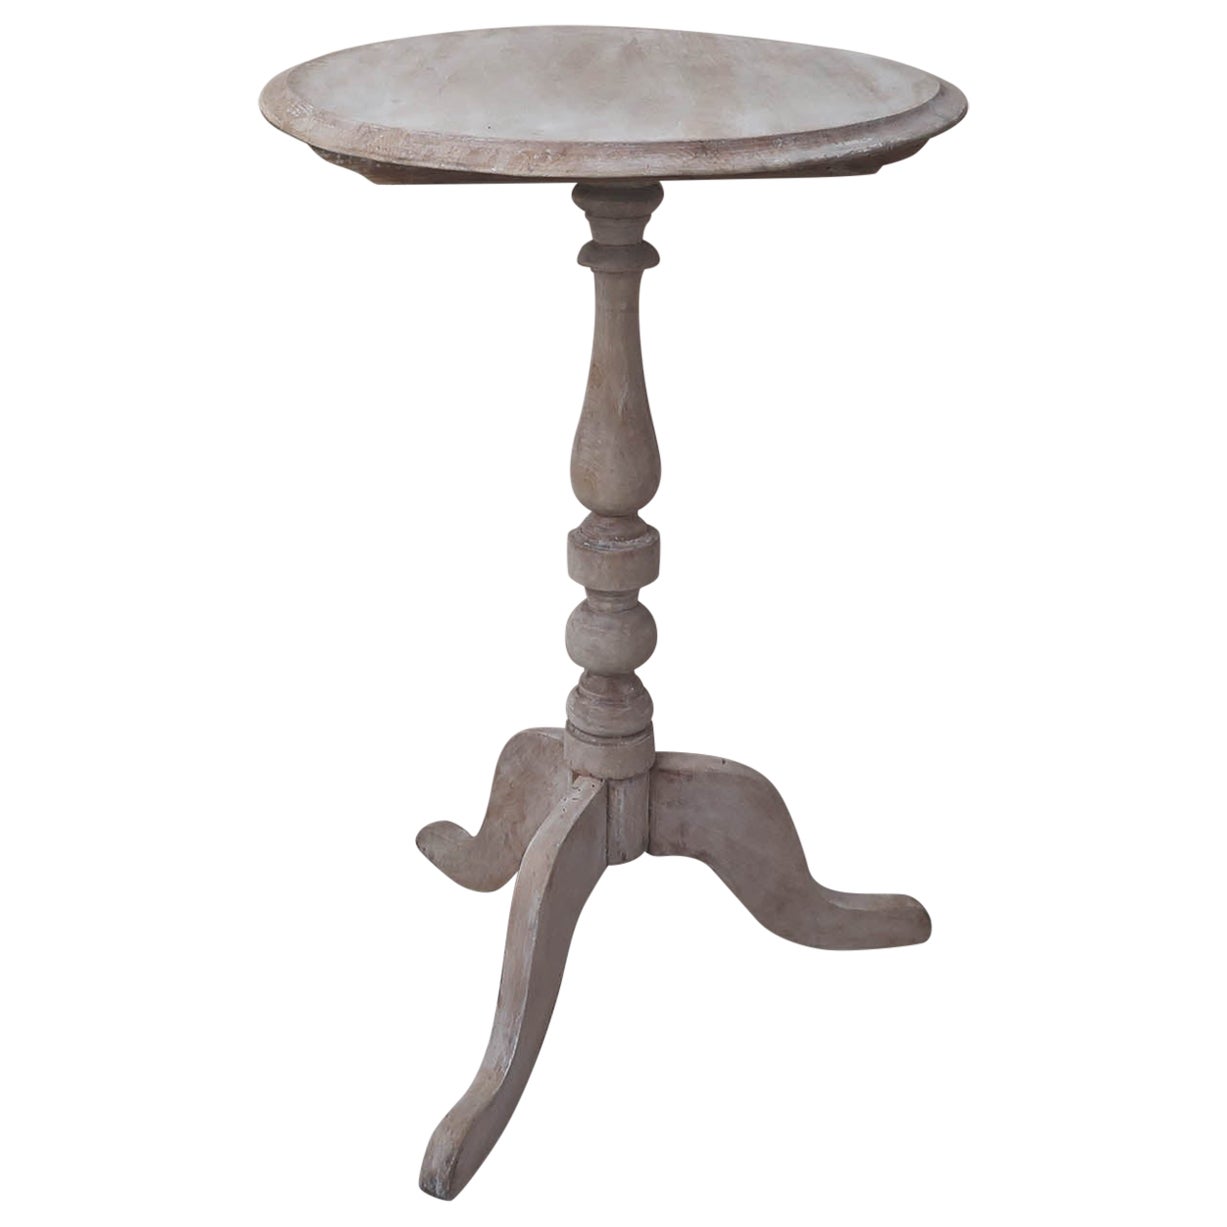 Petite table d'appoint ronde ancienne blanchie de style gustavien. Anglais, vers 1850